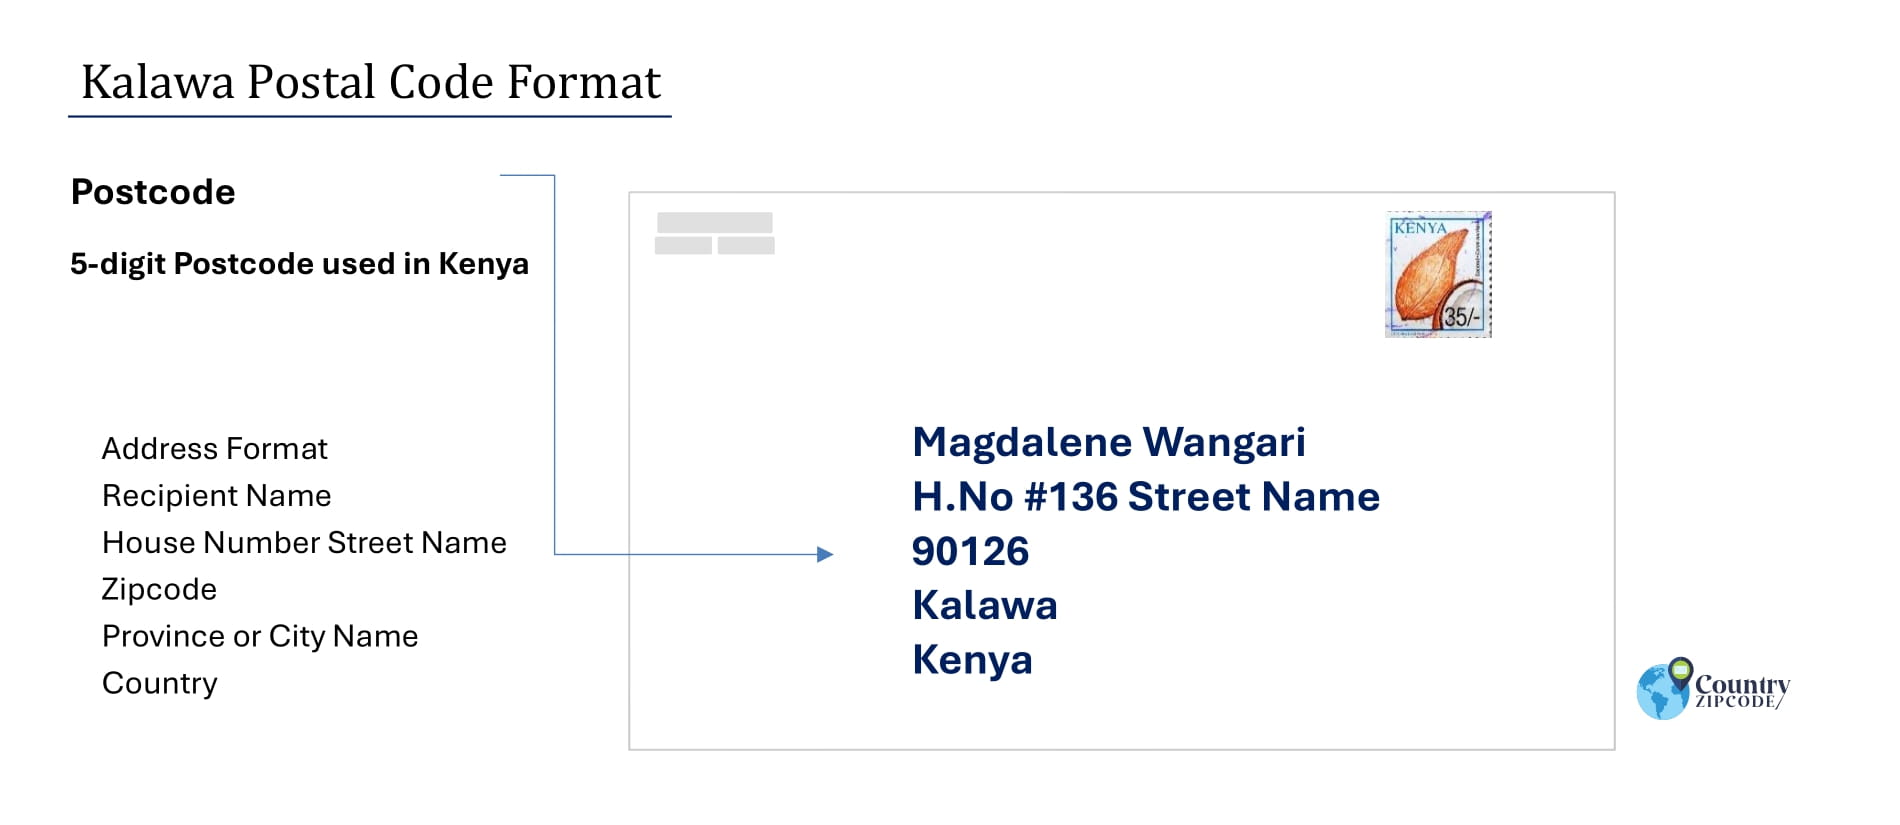 Example of Kalawa Address and postal code format